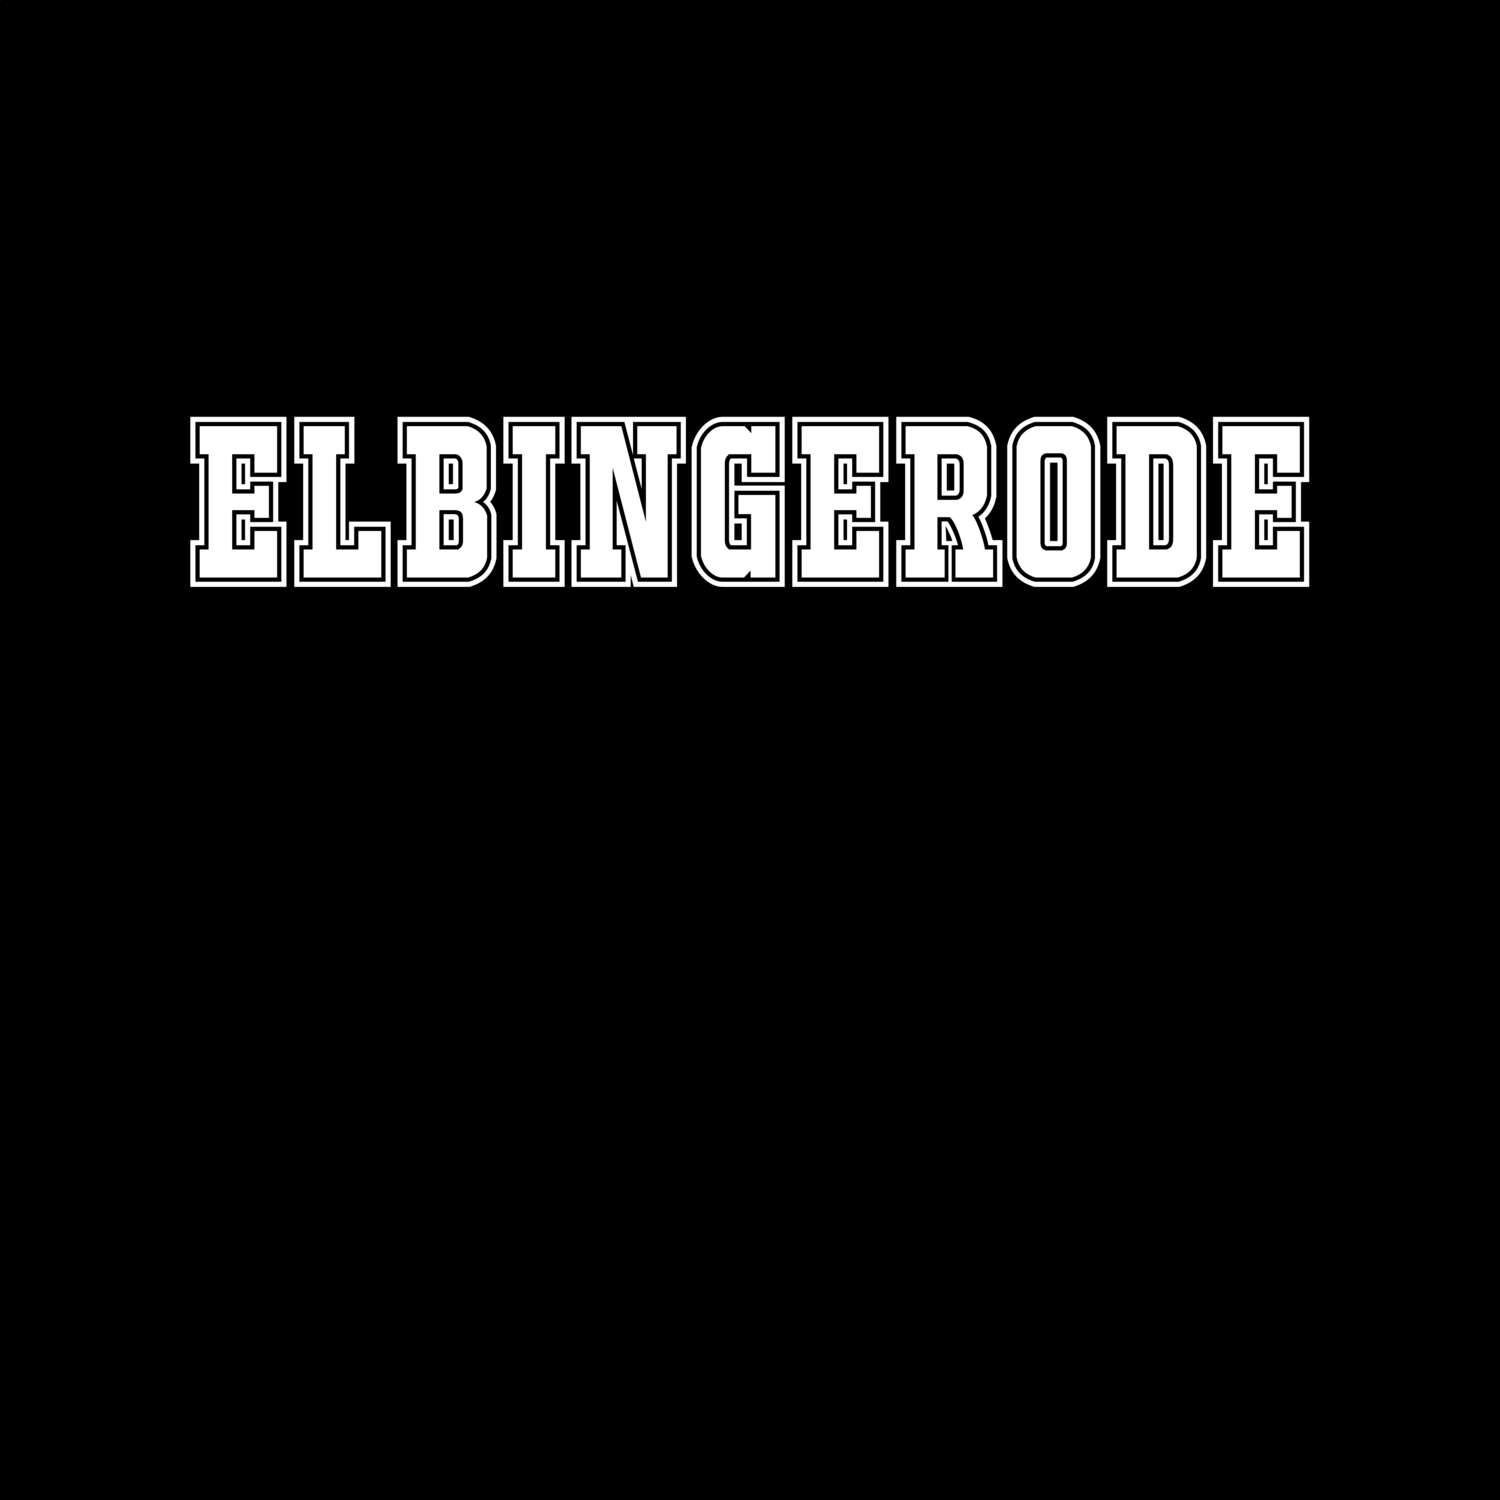 Elbingerode T-Shirt »Classic«